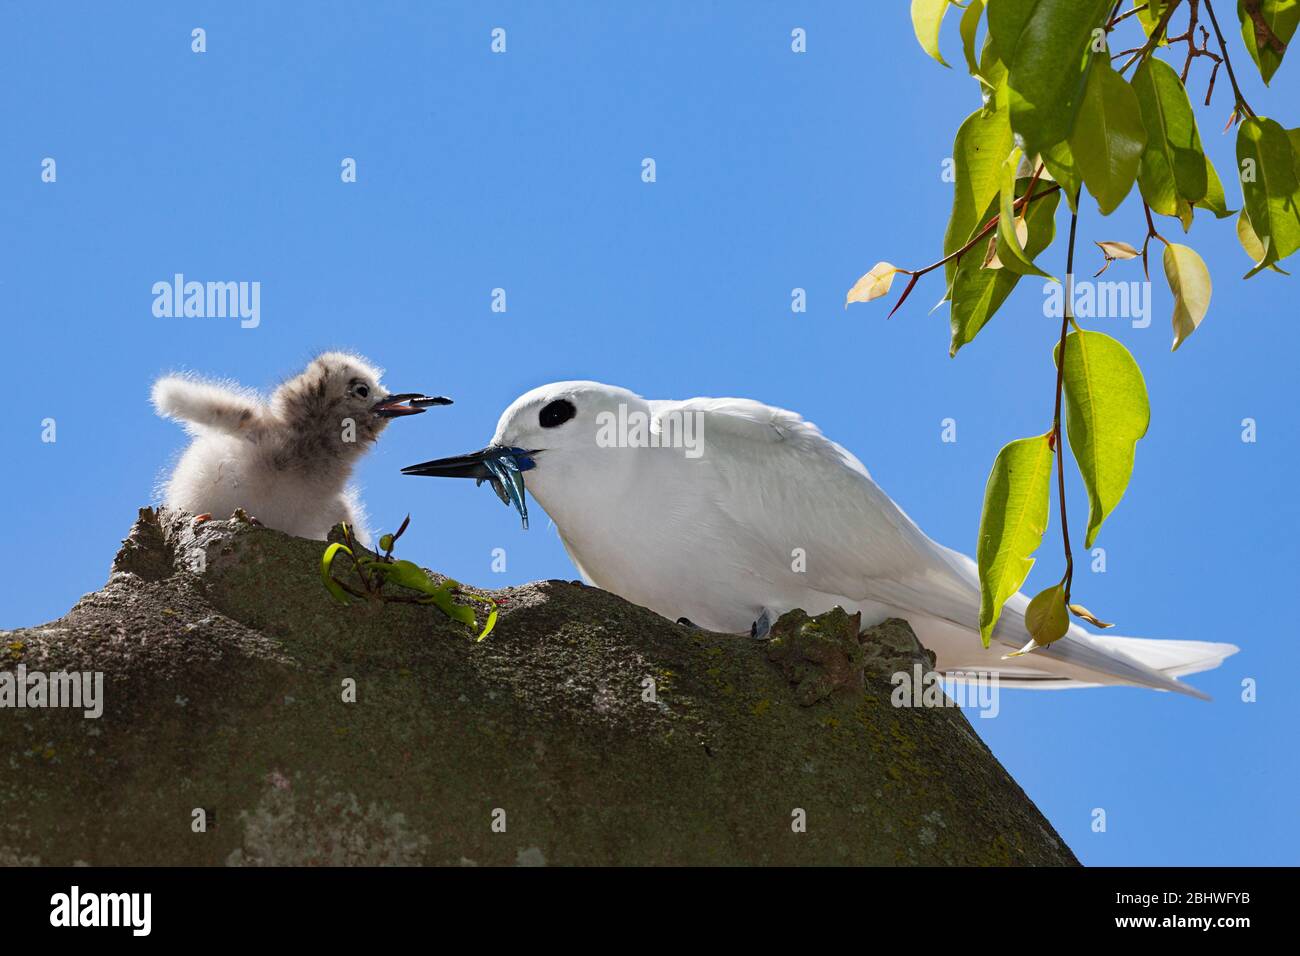 Terna bianca o fata, Gygis alba rothschildi, alimentazione di piccoli pesci a pulcino, Midway Atoll National Wildlife Refuge, Papahanaumokuakea Monument, USA Foto Stock